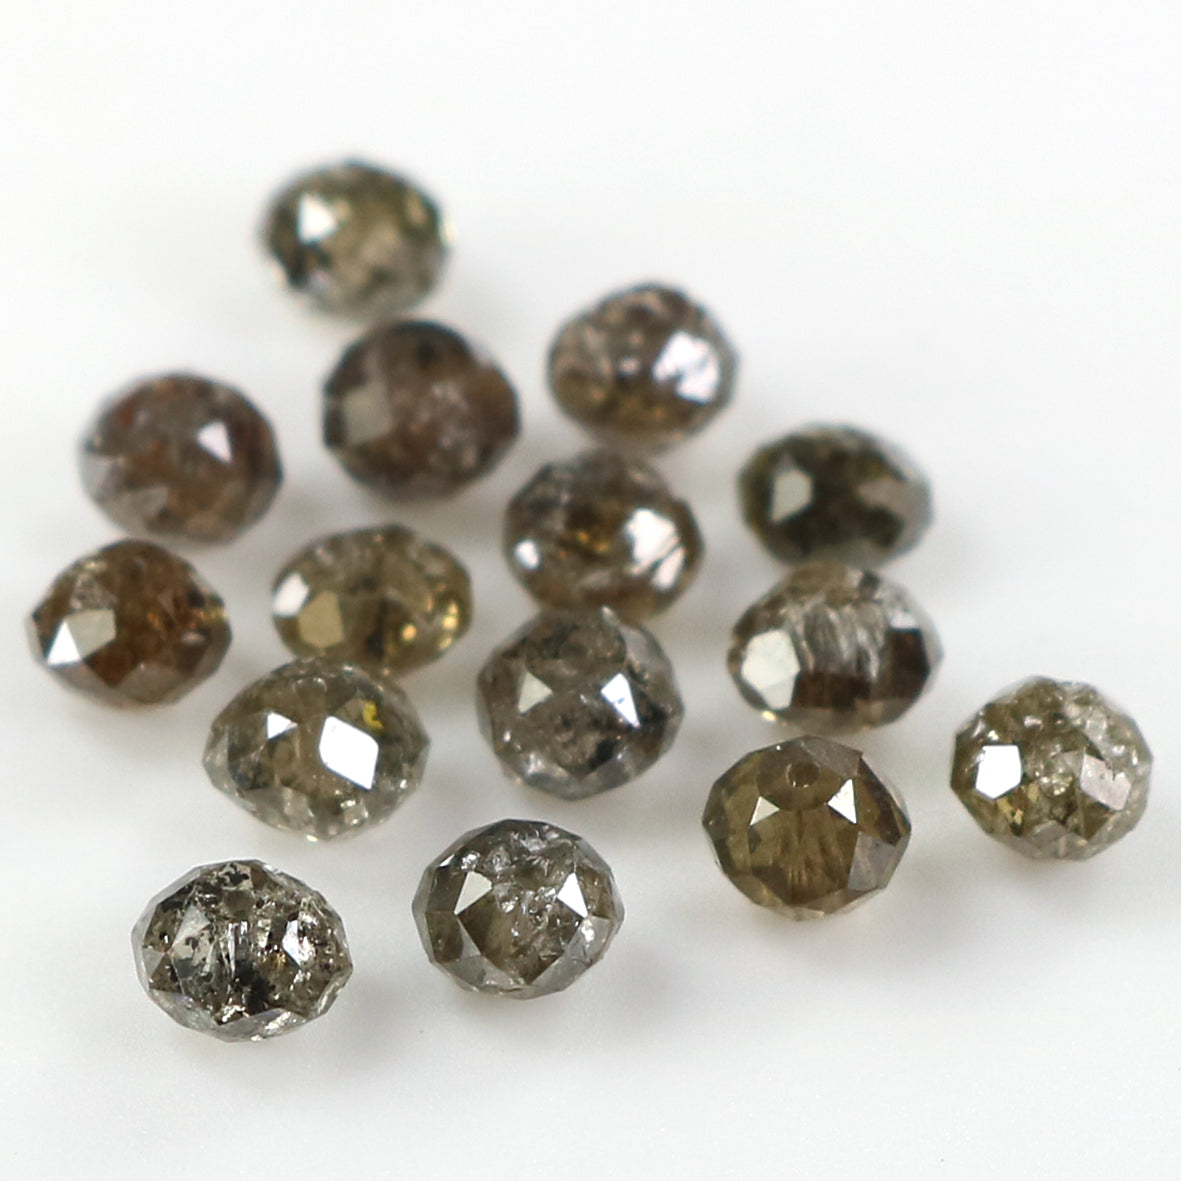 Natural Loose Bead Brown Color Diamond 2.29 CT 2.50 MM Bead Shape Rose Cut Diamond L1735